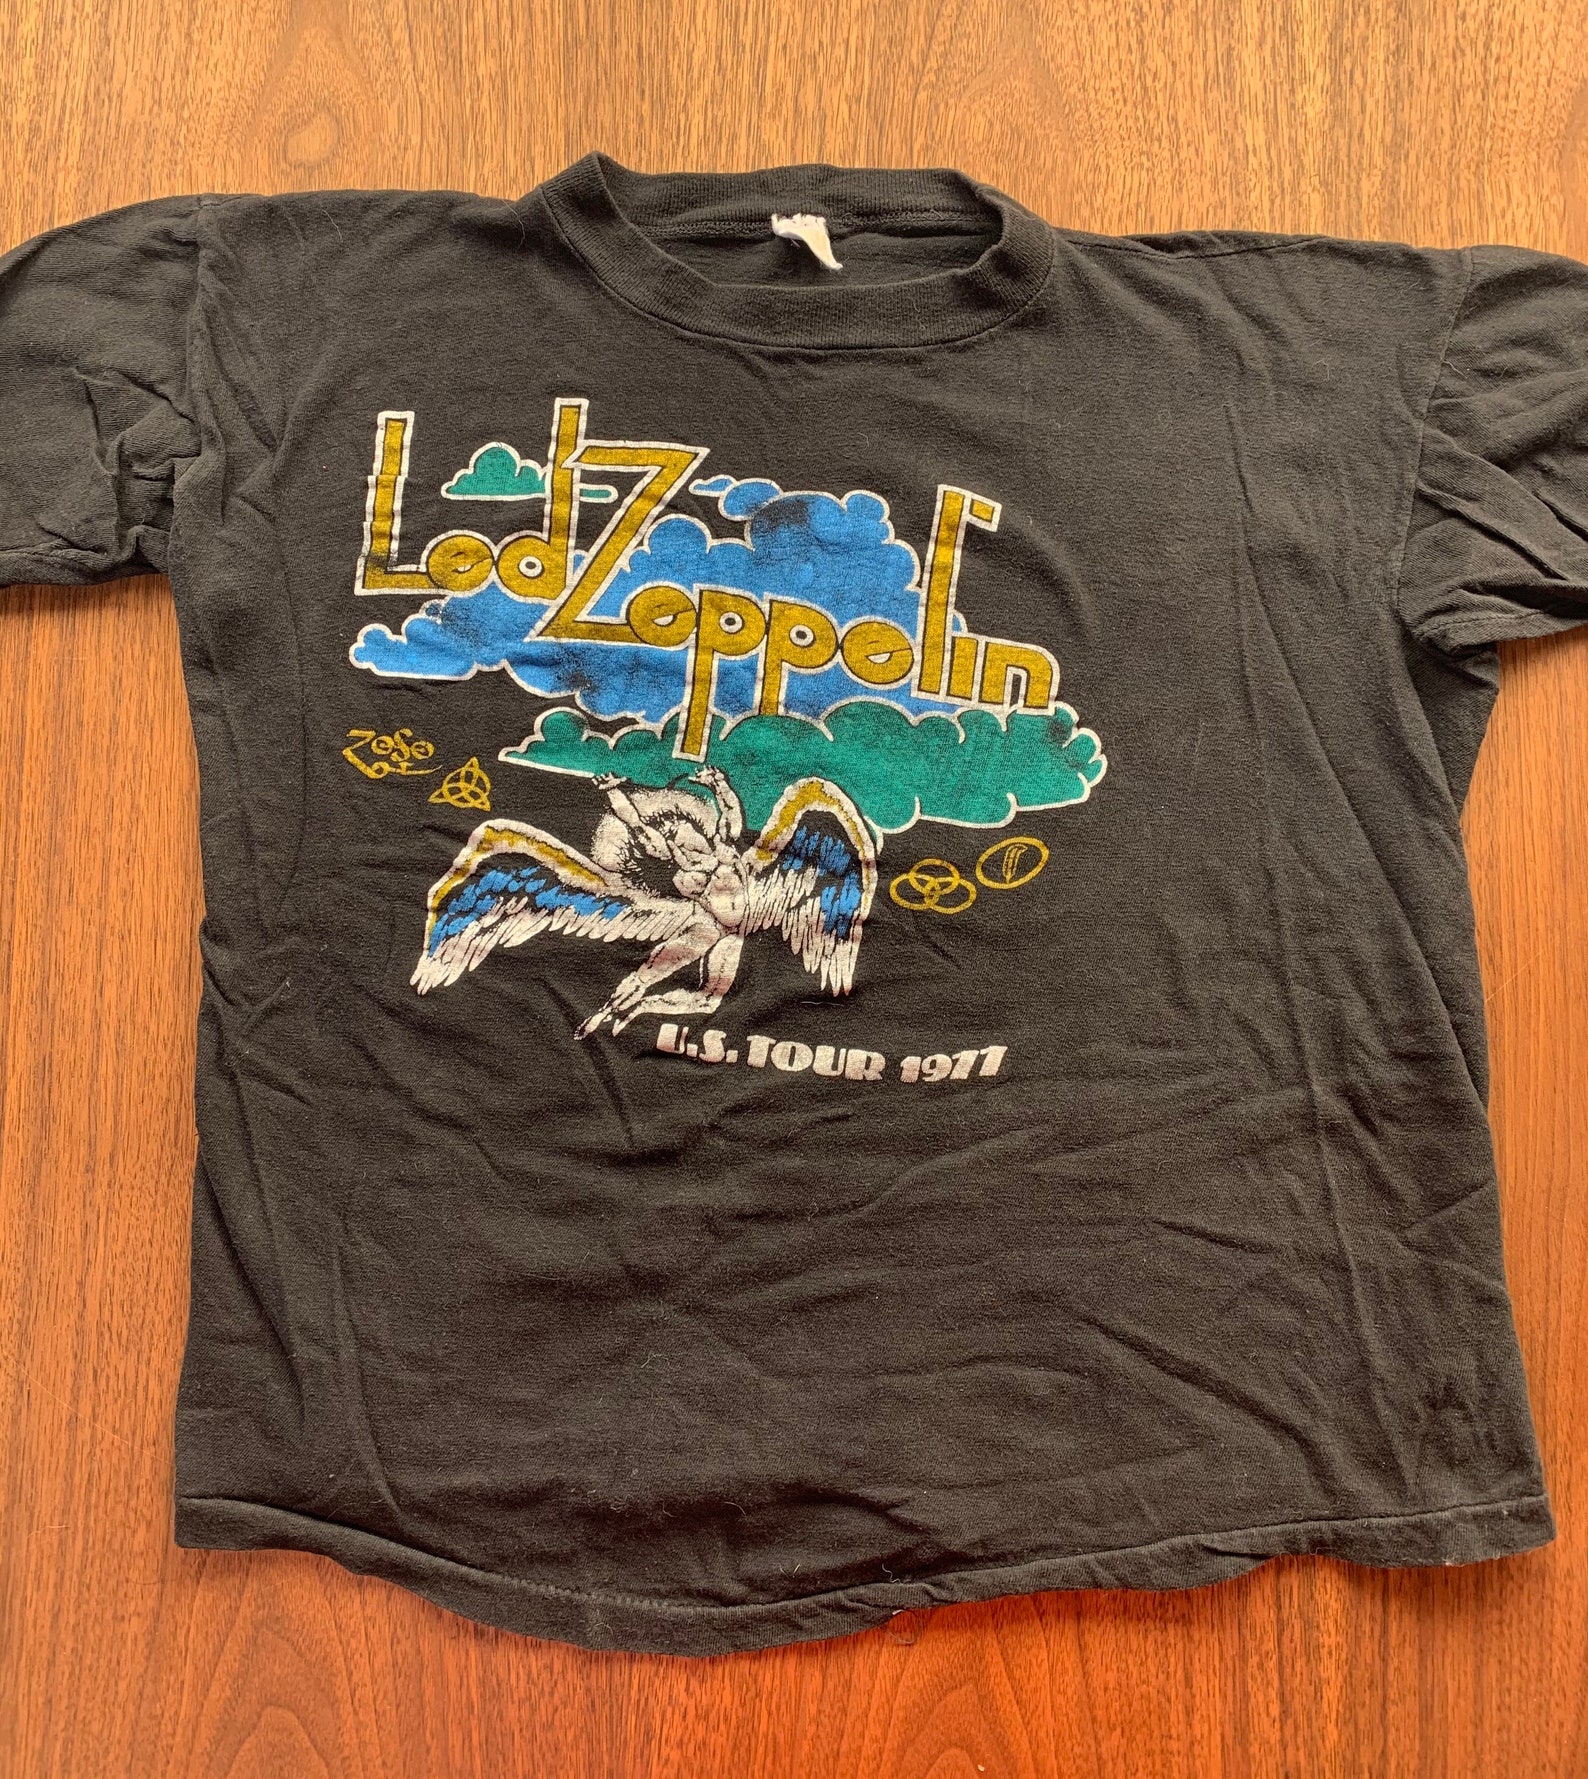 Vintage rare Led Zeppelin 1977 Tour tshirt authentic puffy | Etsy